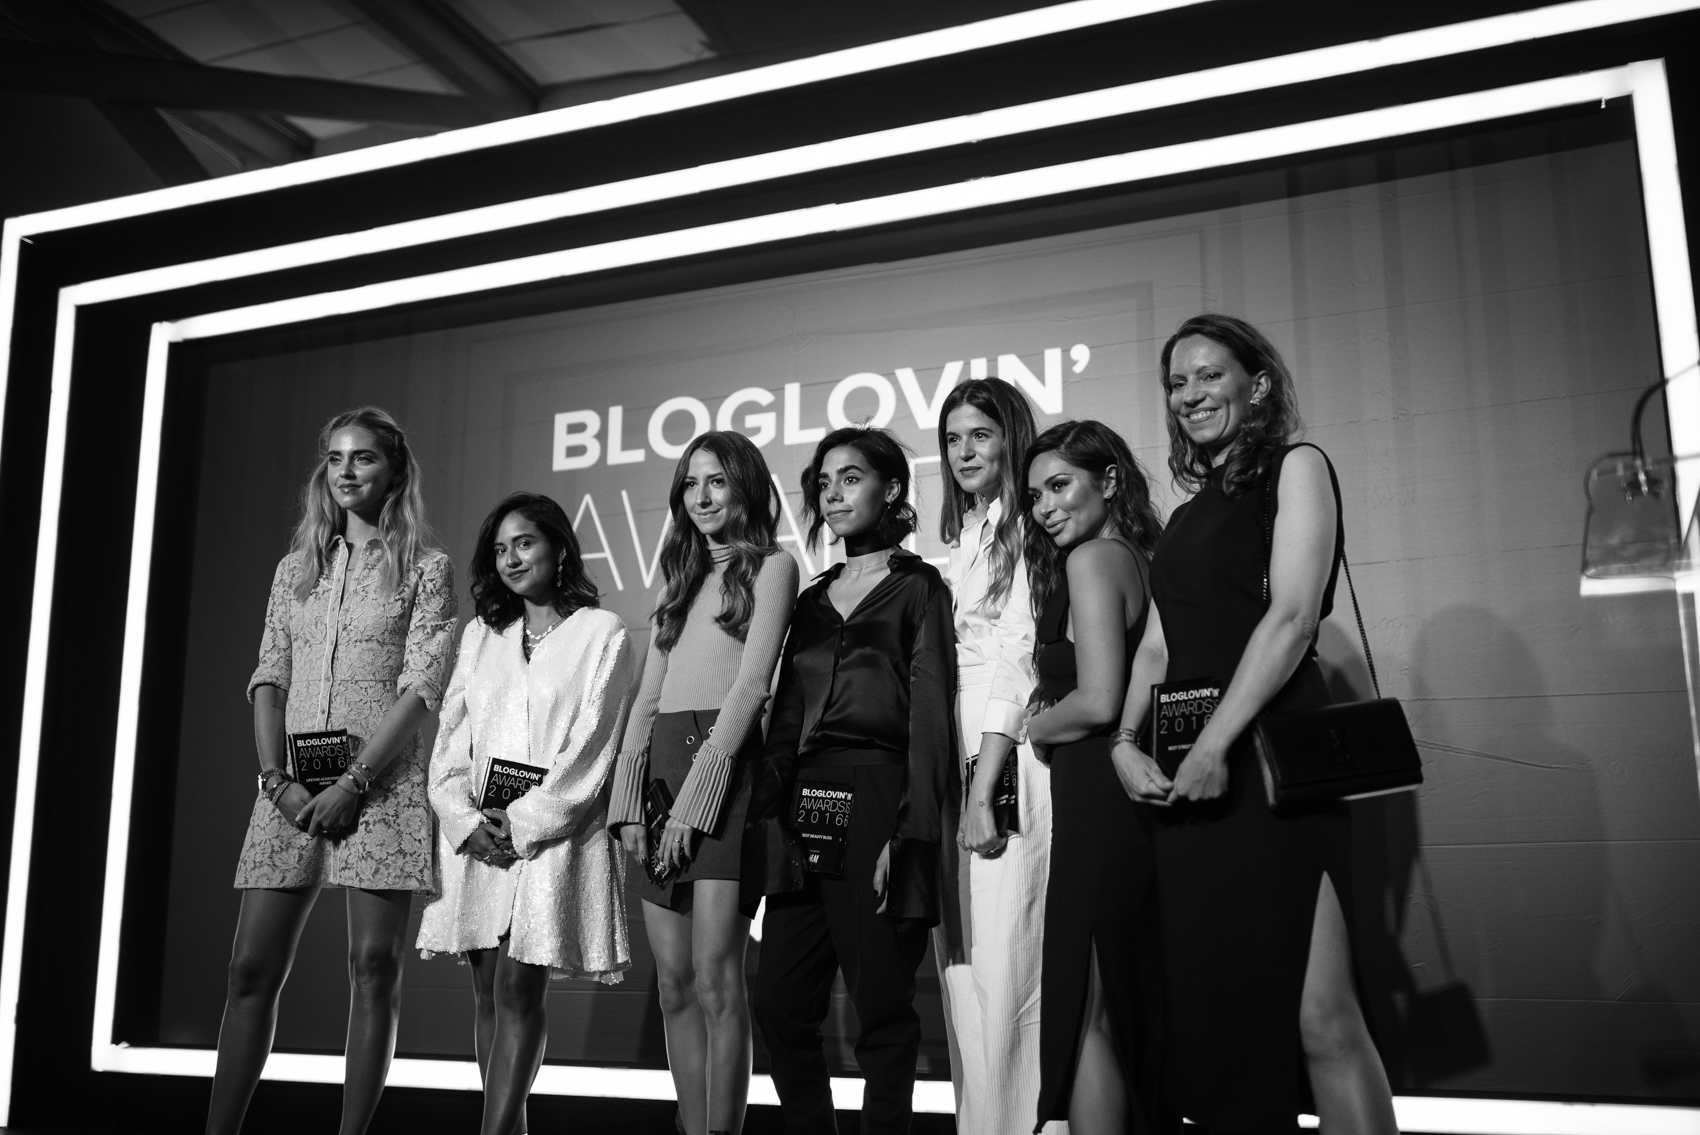 The winners of the 2016 Bloglovin Awards: Chiara Ferragni, Arielle Noa Charnas, Maristella Gonzalez, Marianna Hewitt and Sandra Semburg